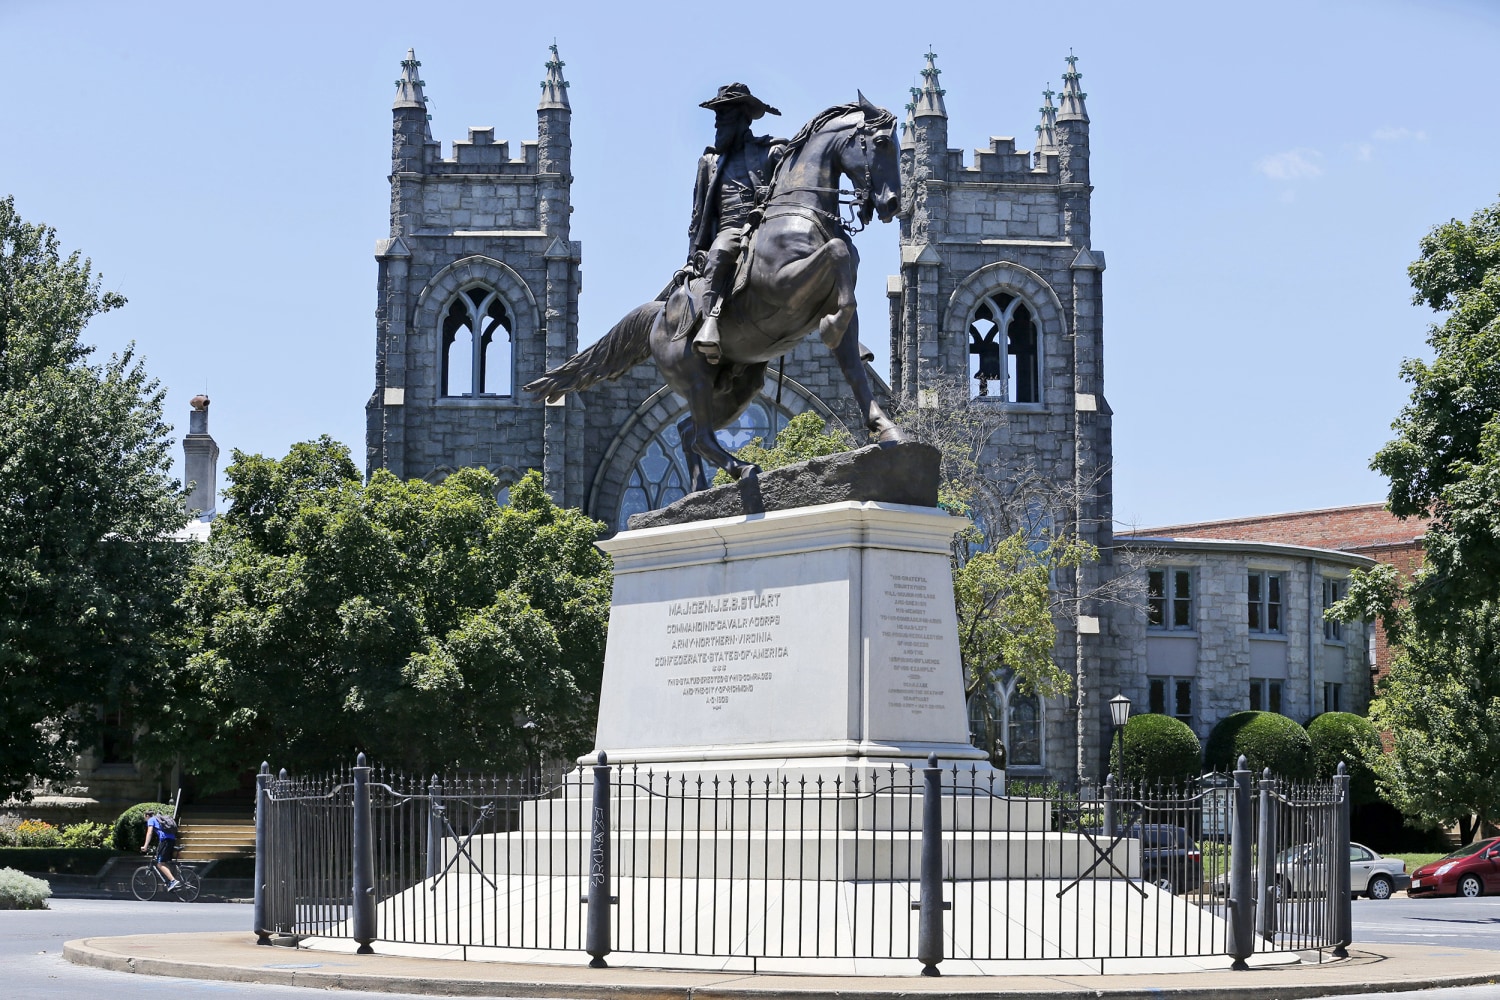 Richmond Could Be Next Confederate Monument Battleground - NBC News